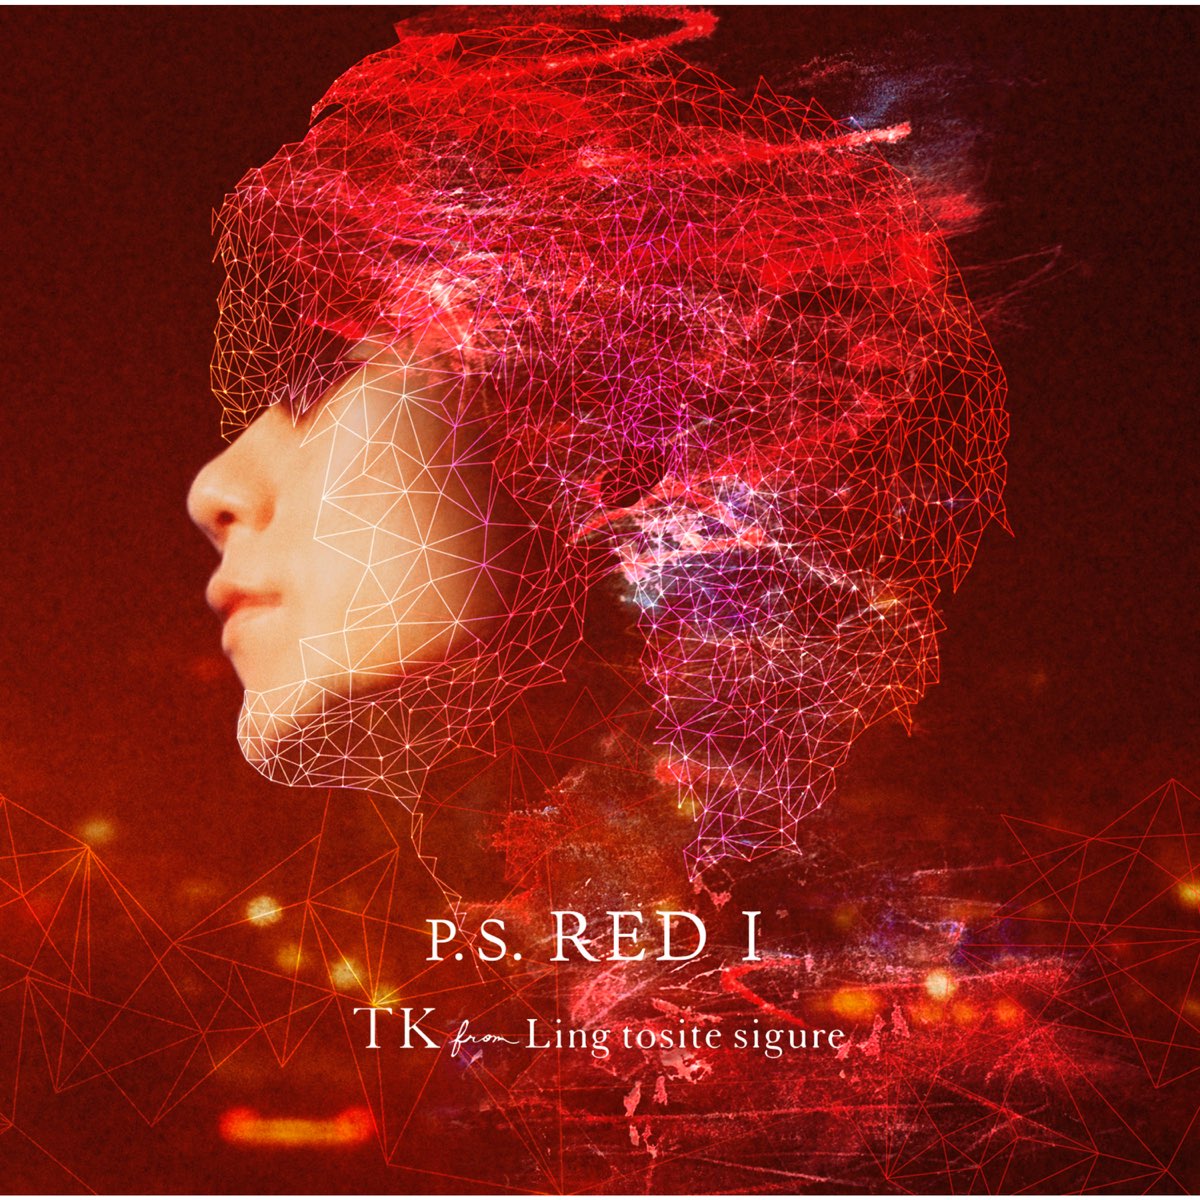 P.S. RED I.jpg